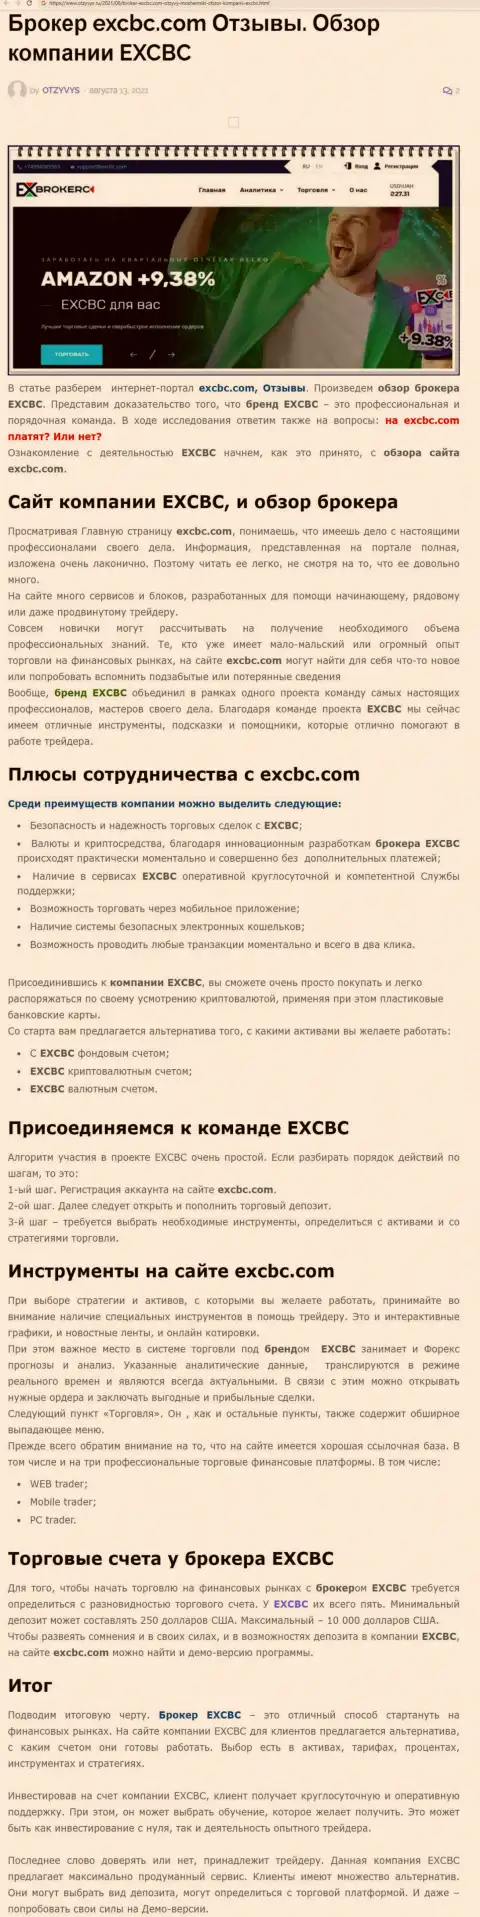 Публикация об форекс дилинговой компании EXCBC на веб-сервисе otzyvys ru